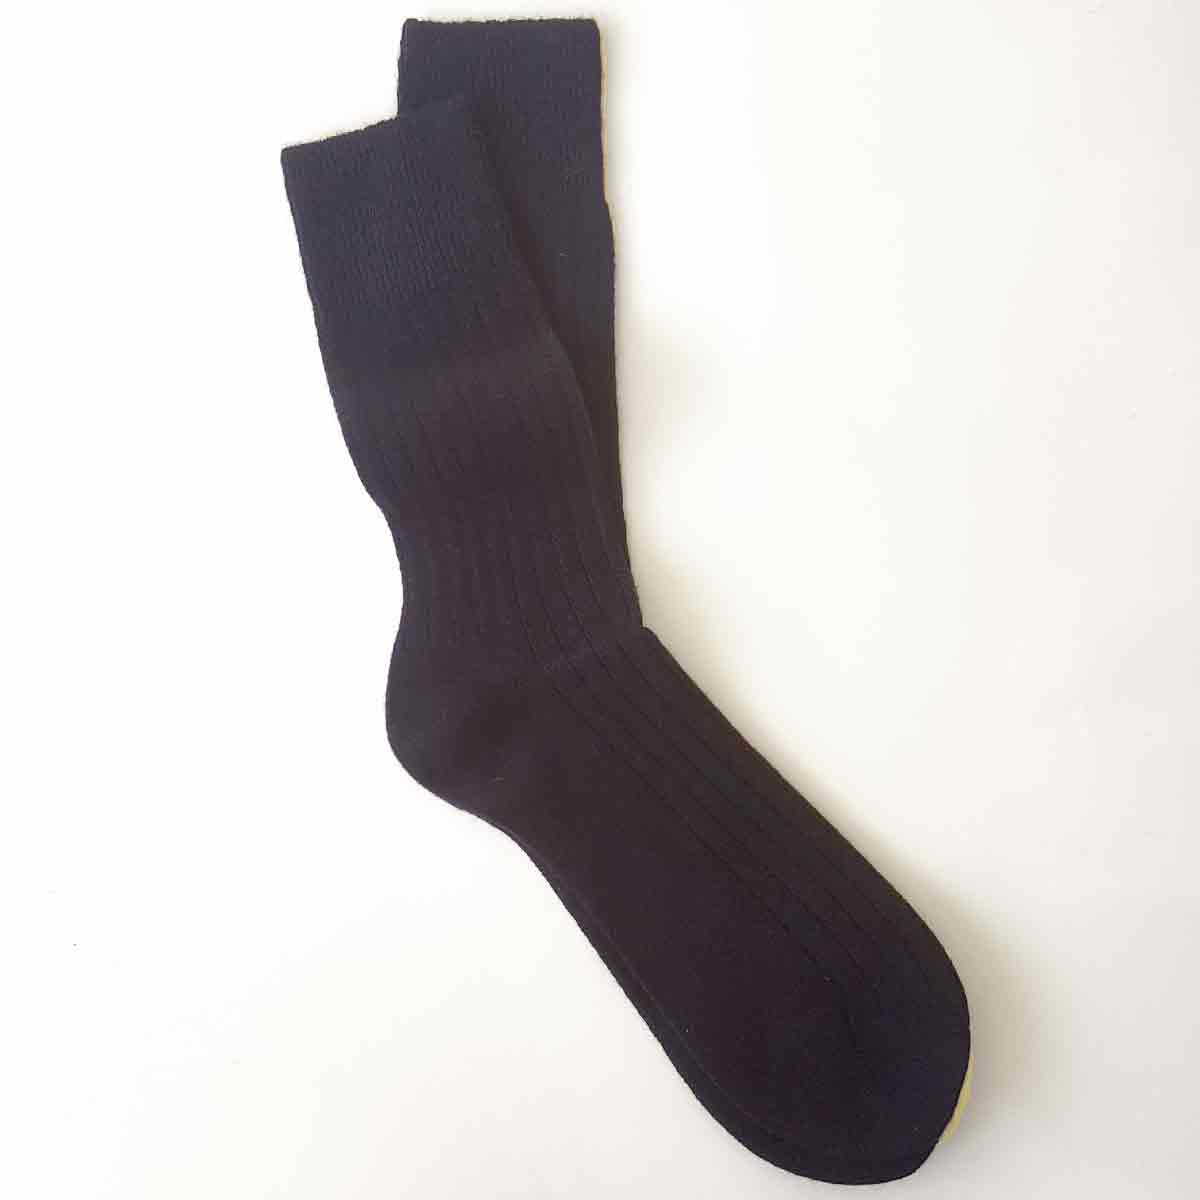 SOCKS: Men's wool socks with cashmere